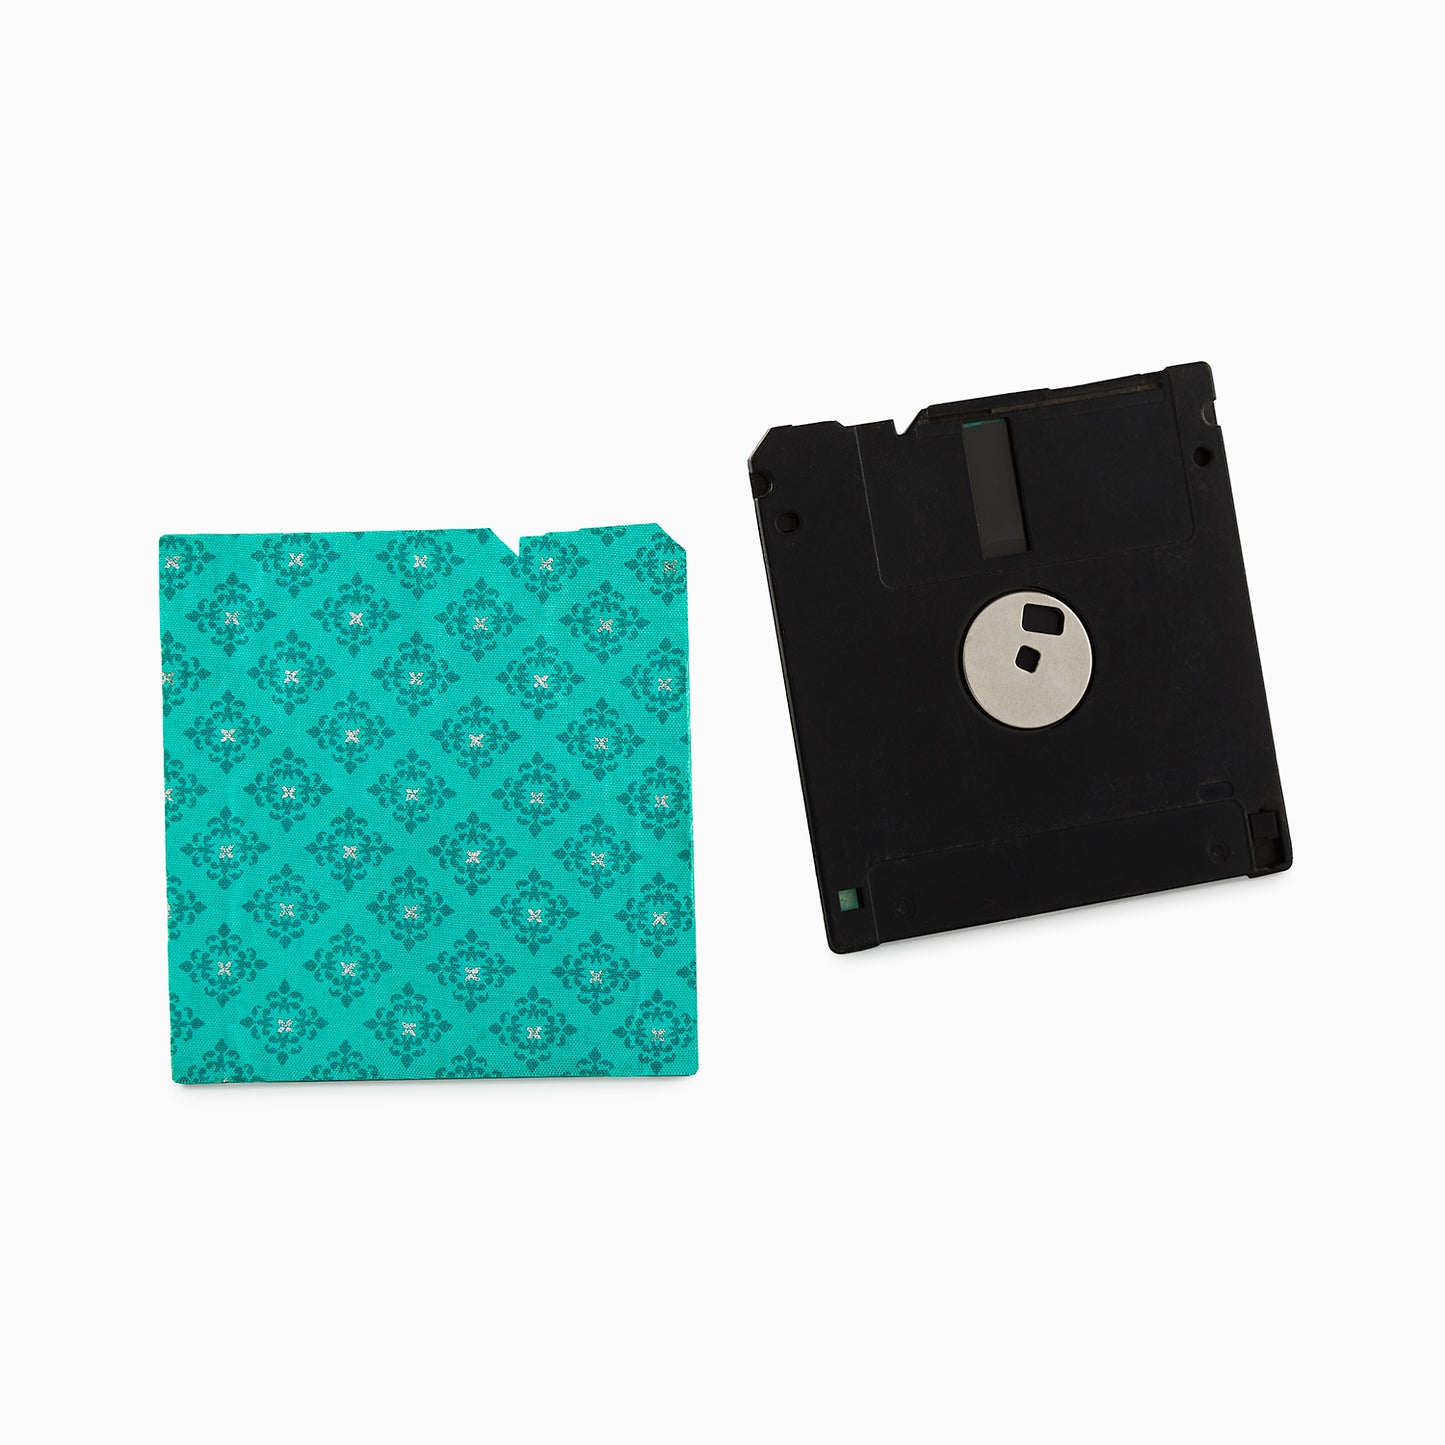 Arctic Blue - Floppy Disk Coaster Set of 2